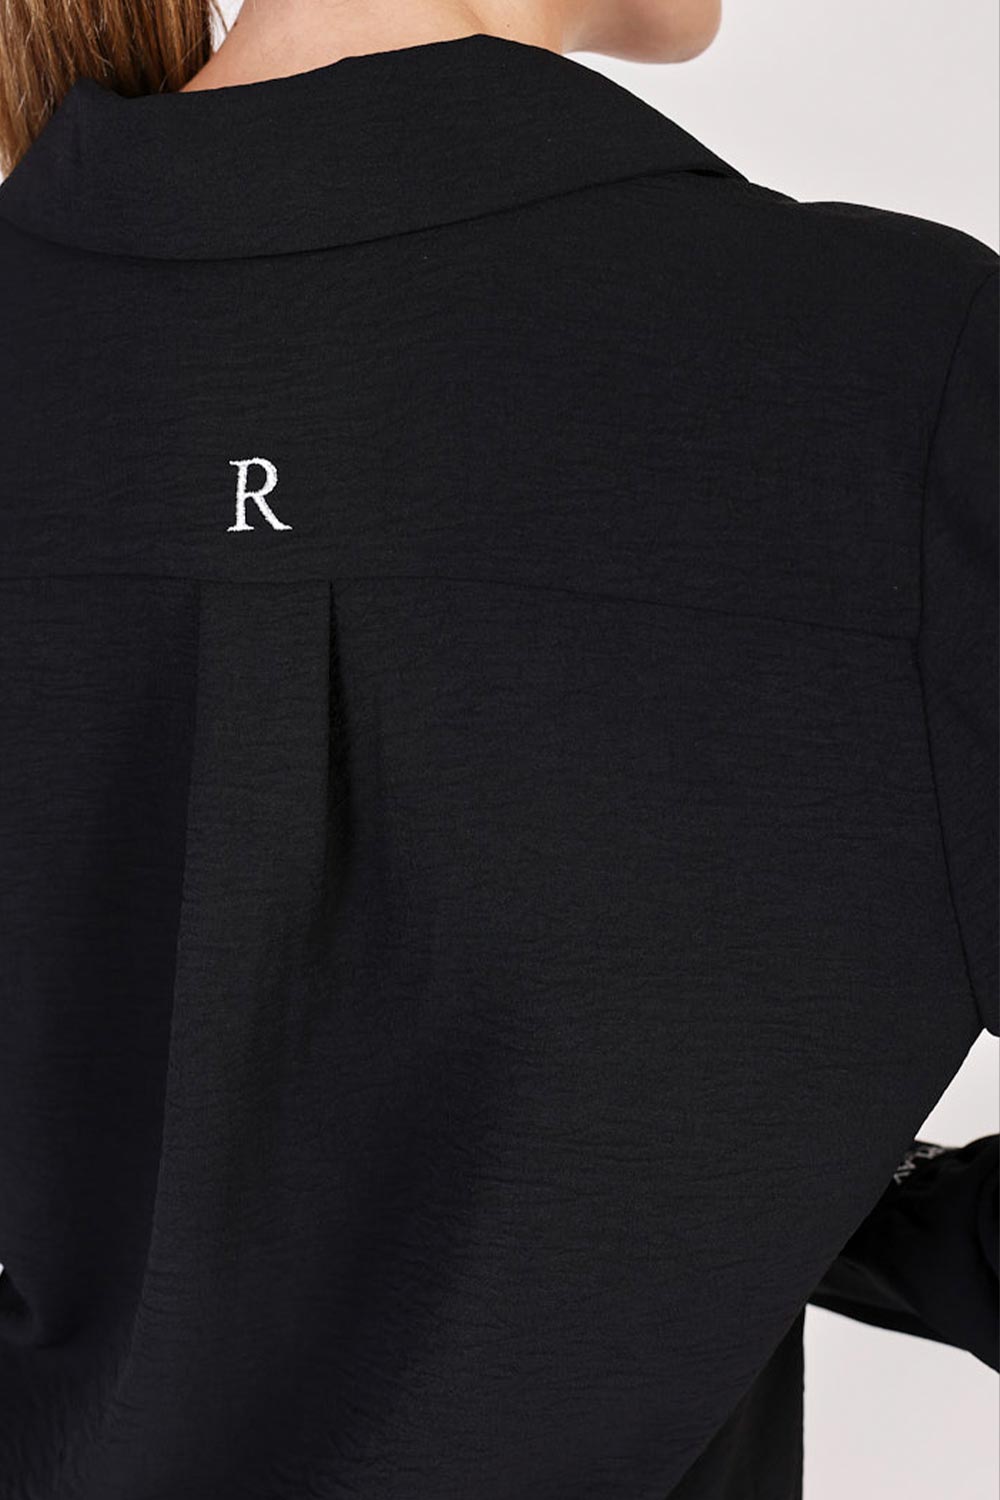 Replay חולצה מכופתרת Yam בצבע שחור לנשים-Replay-XS-נאקו